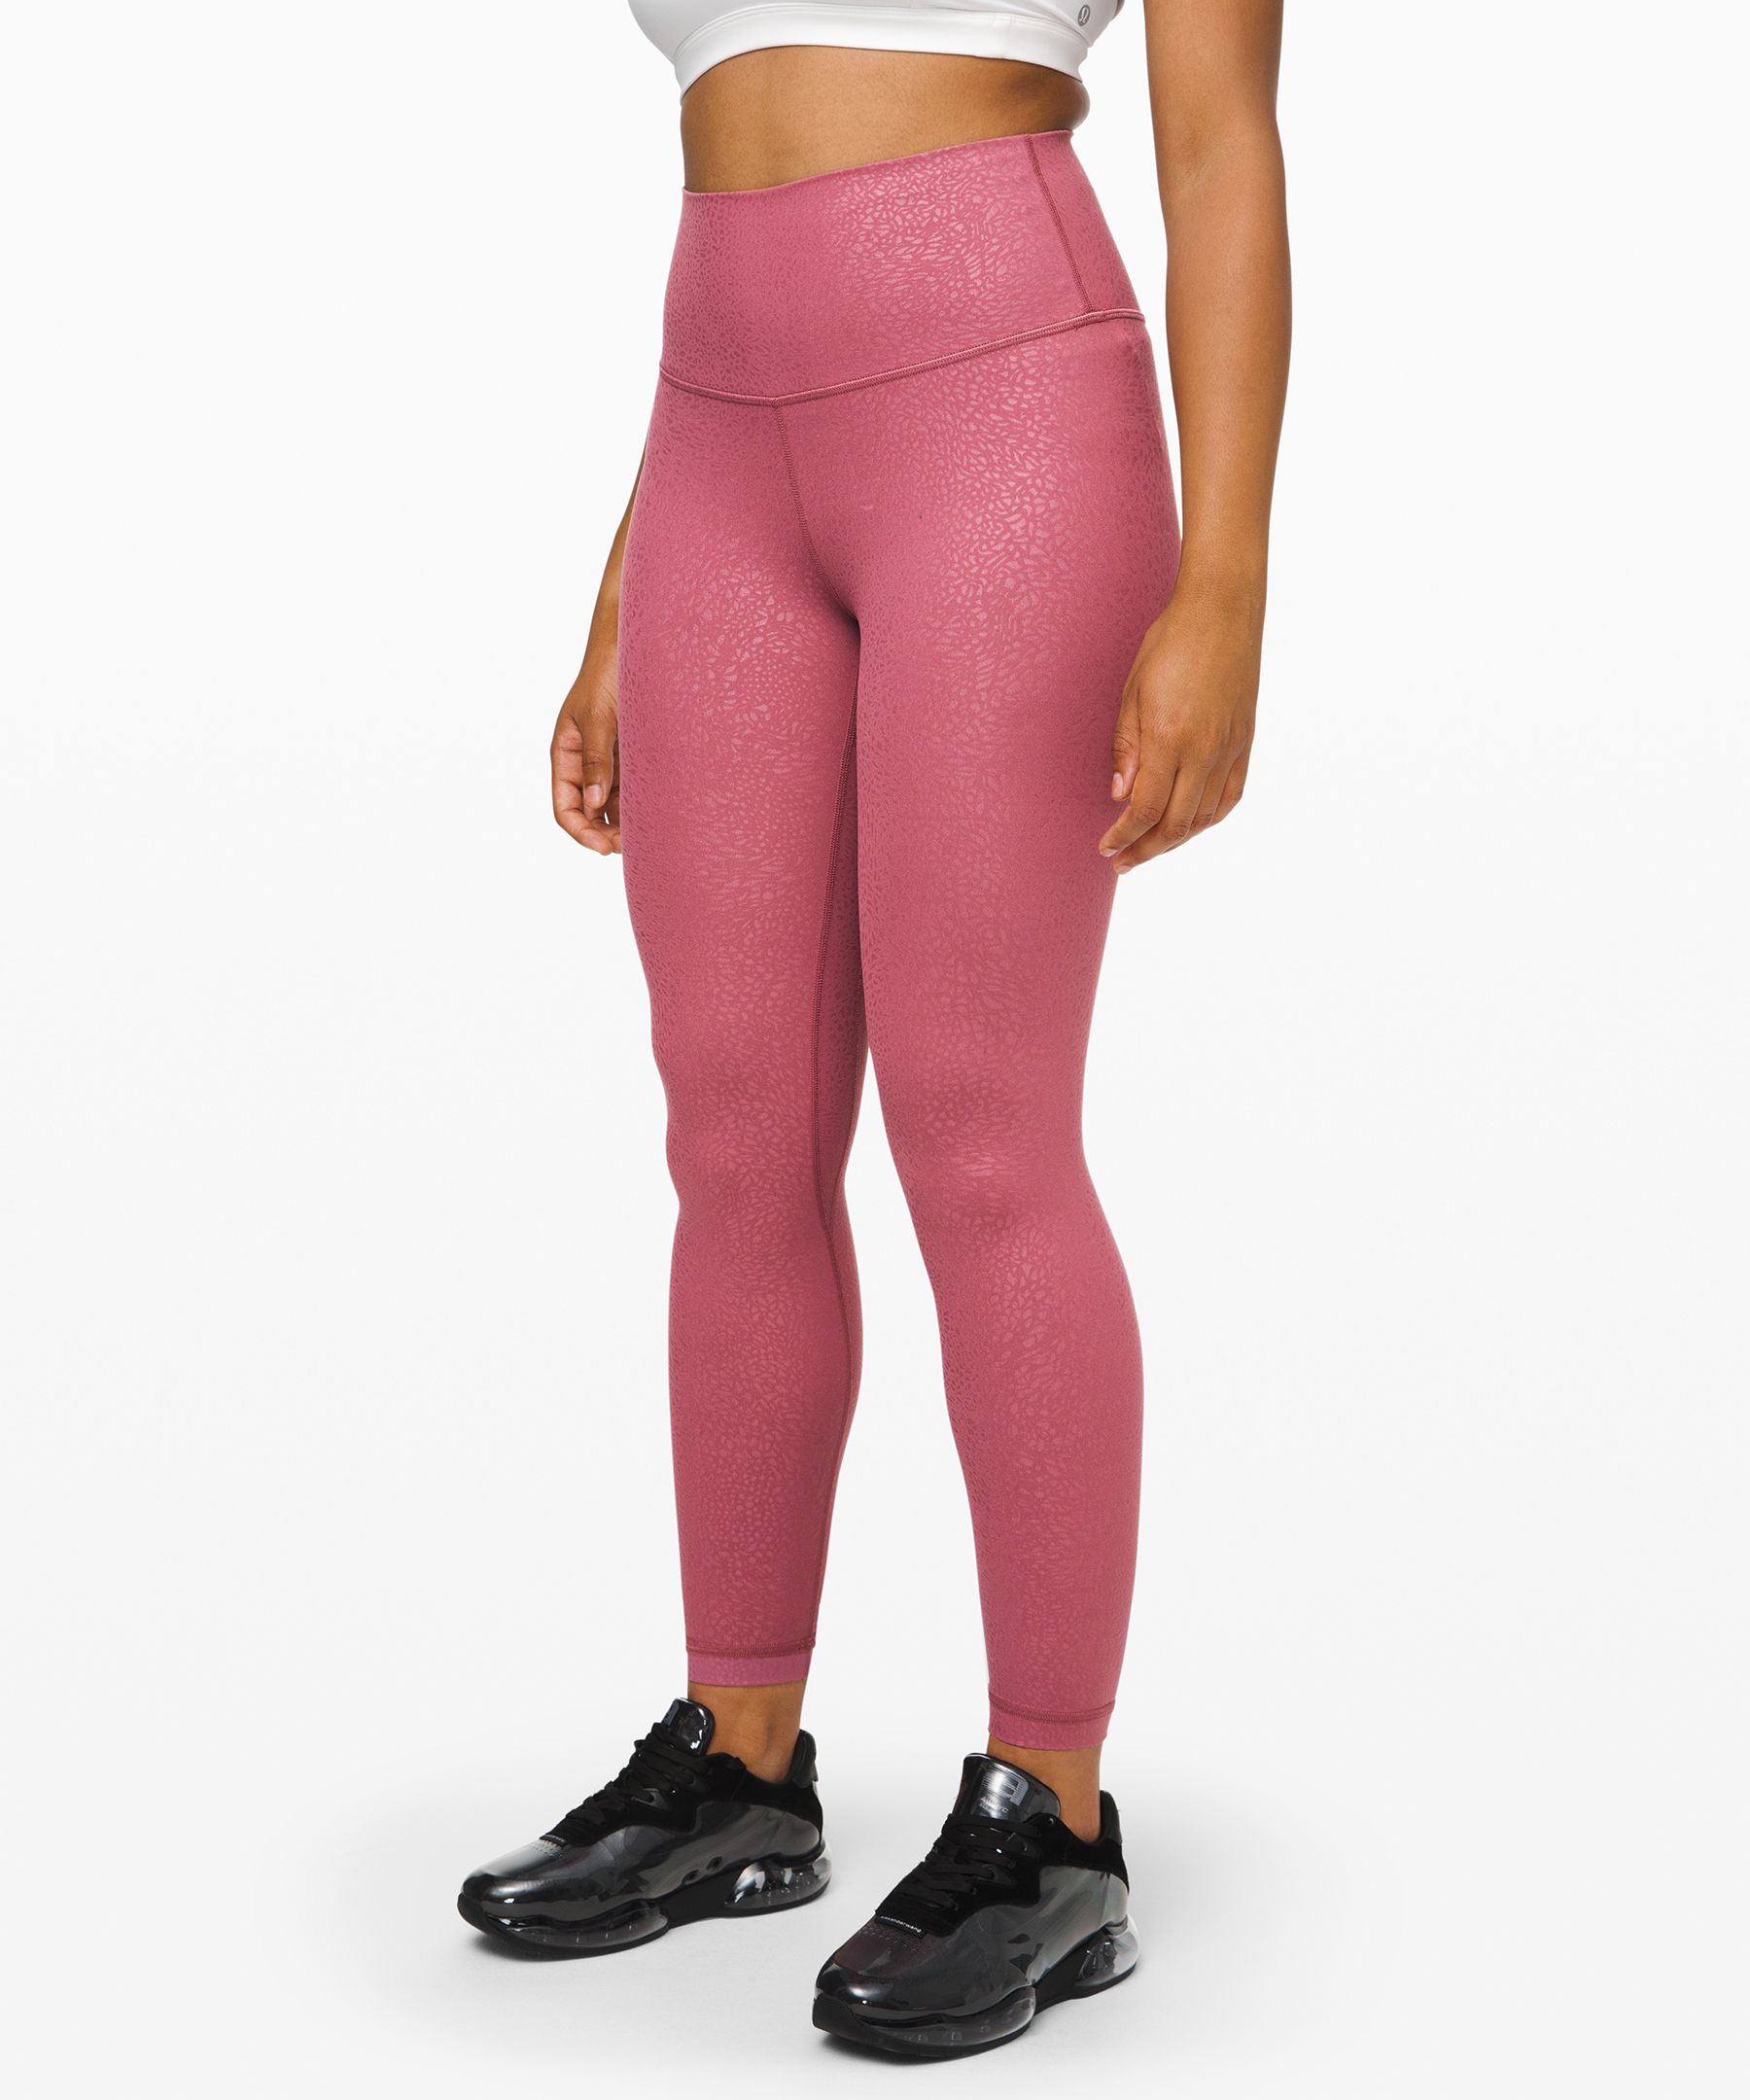 Lululemon Align 25” SONIC PINK legging  Pink leggings, Lululemon align  leggings, Pants for women